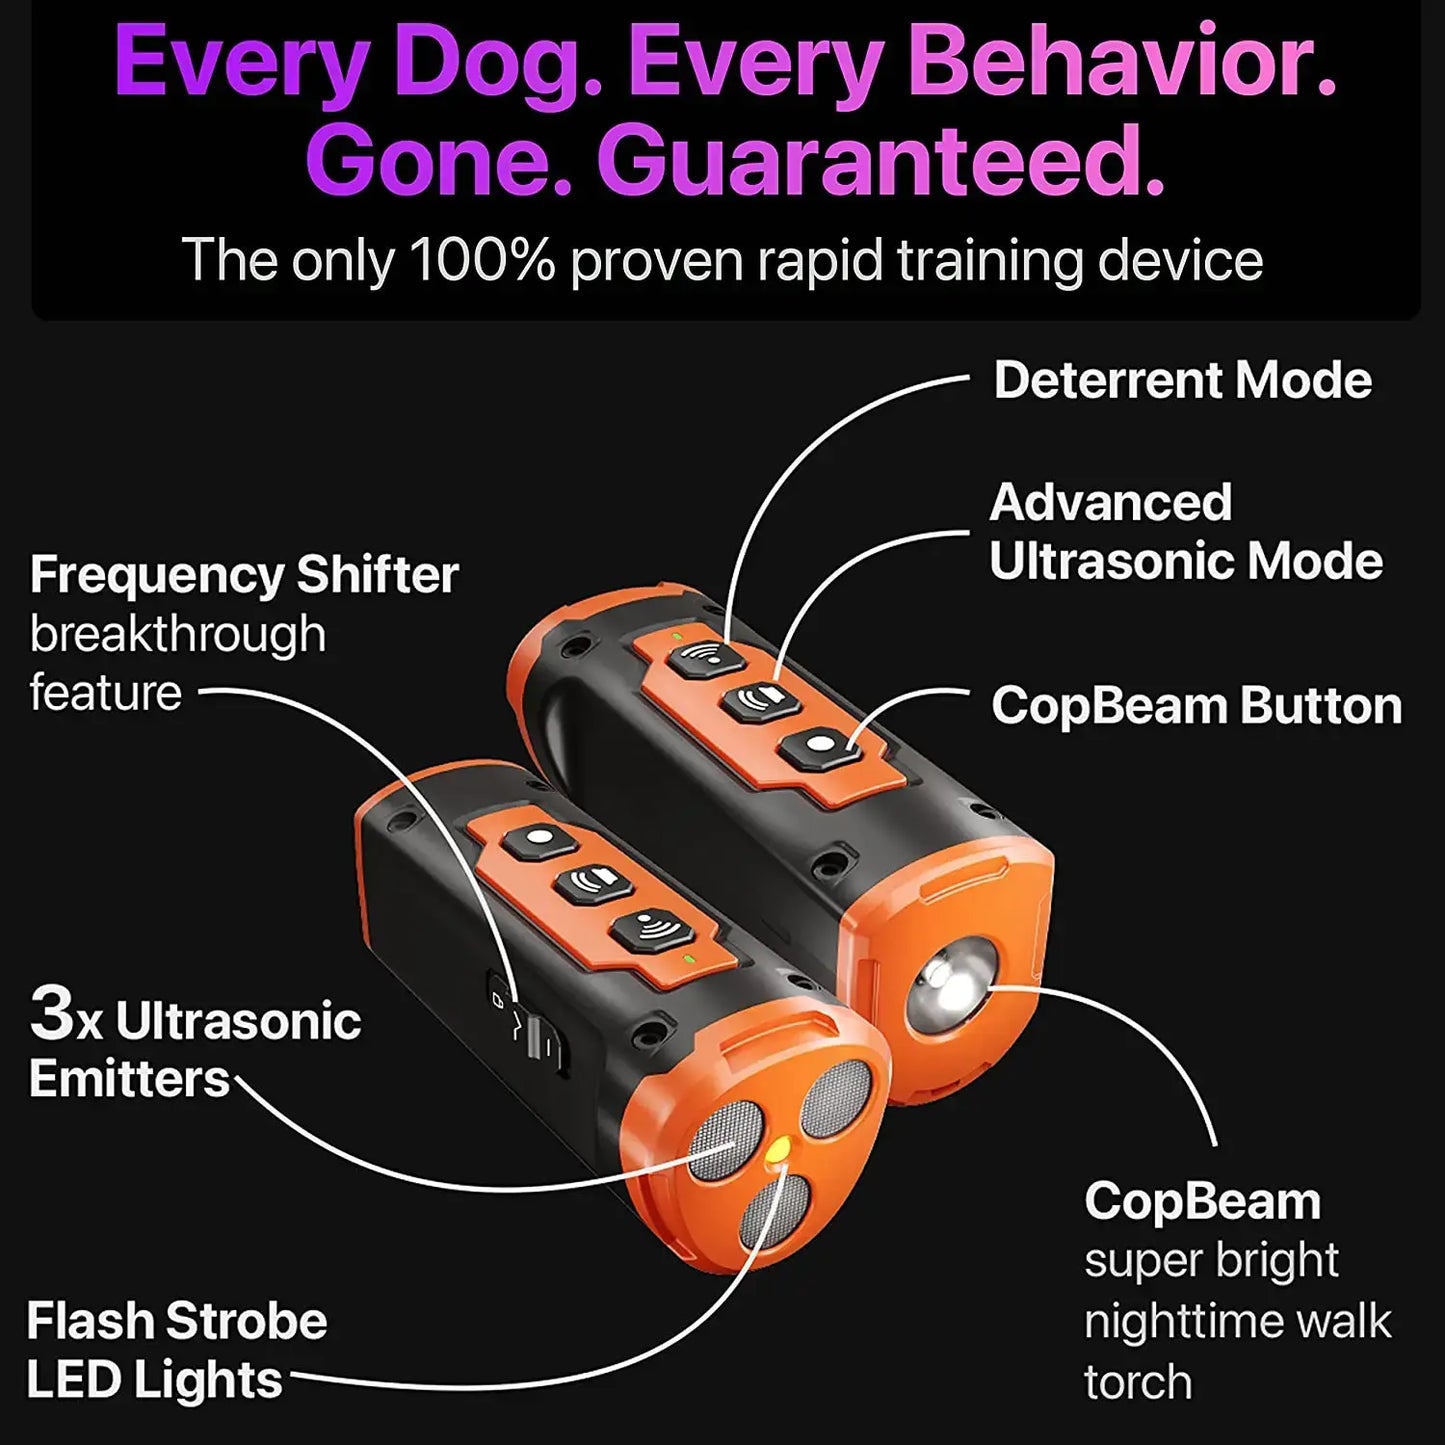 Ultrasonic Pet Training and Deterrent